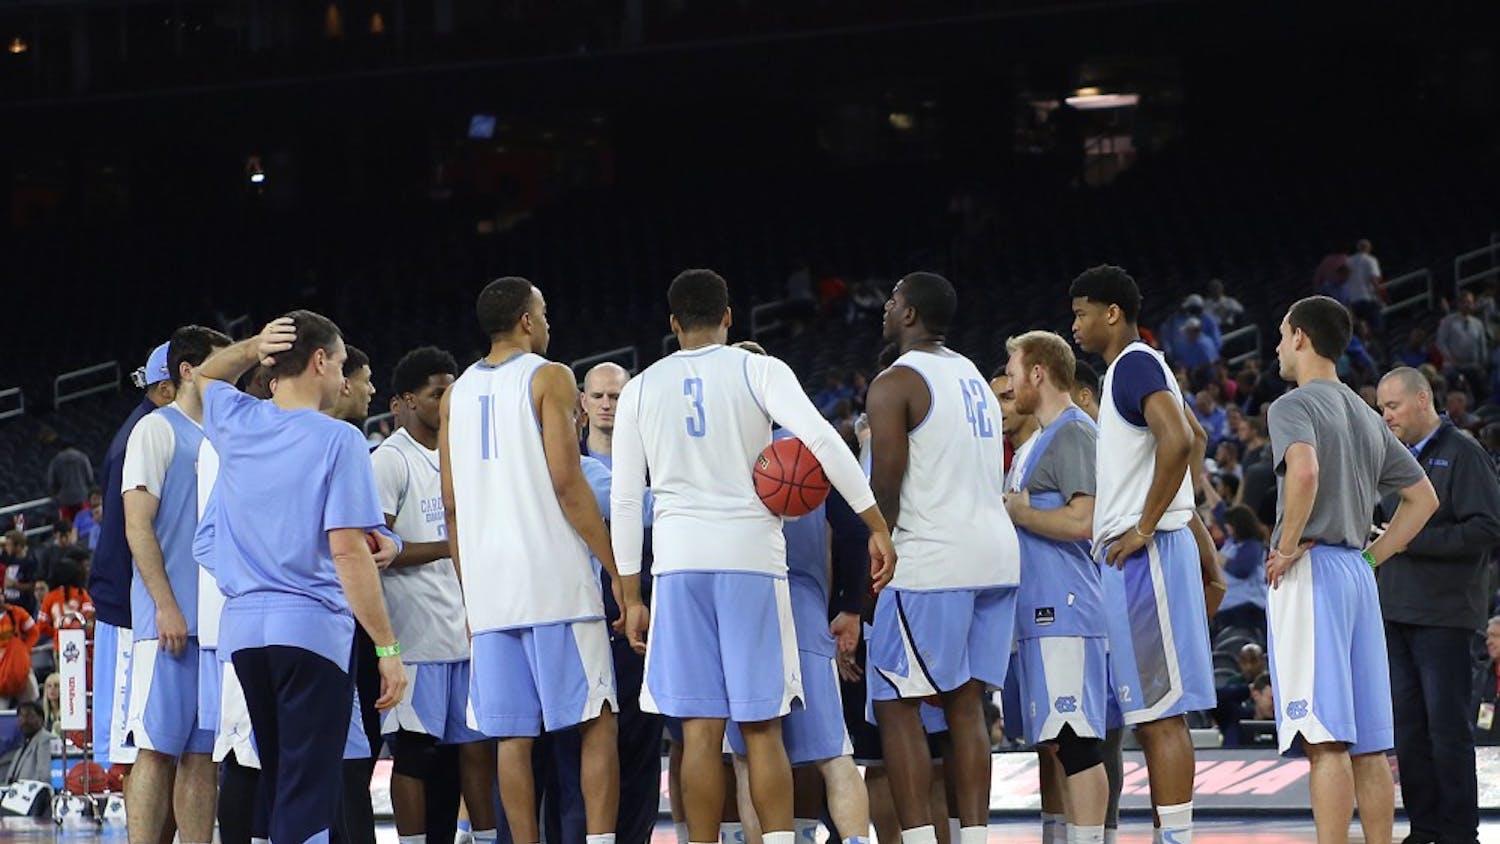 The UNC men's basketball team huddles up at center court.